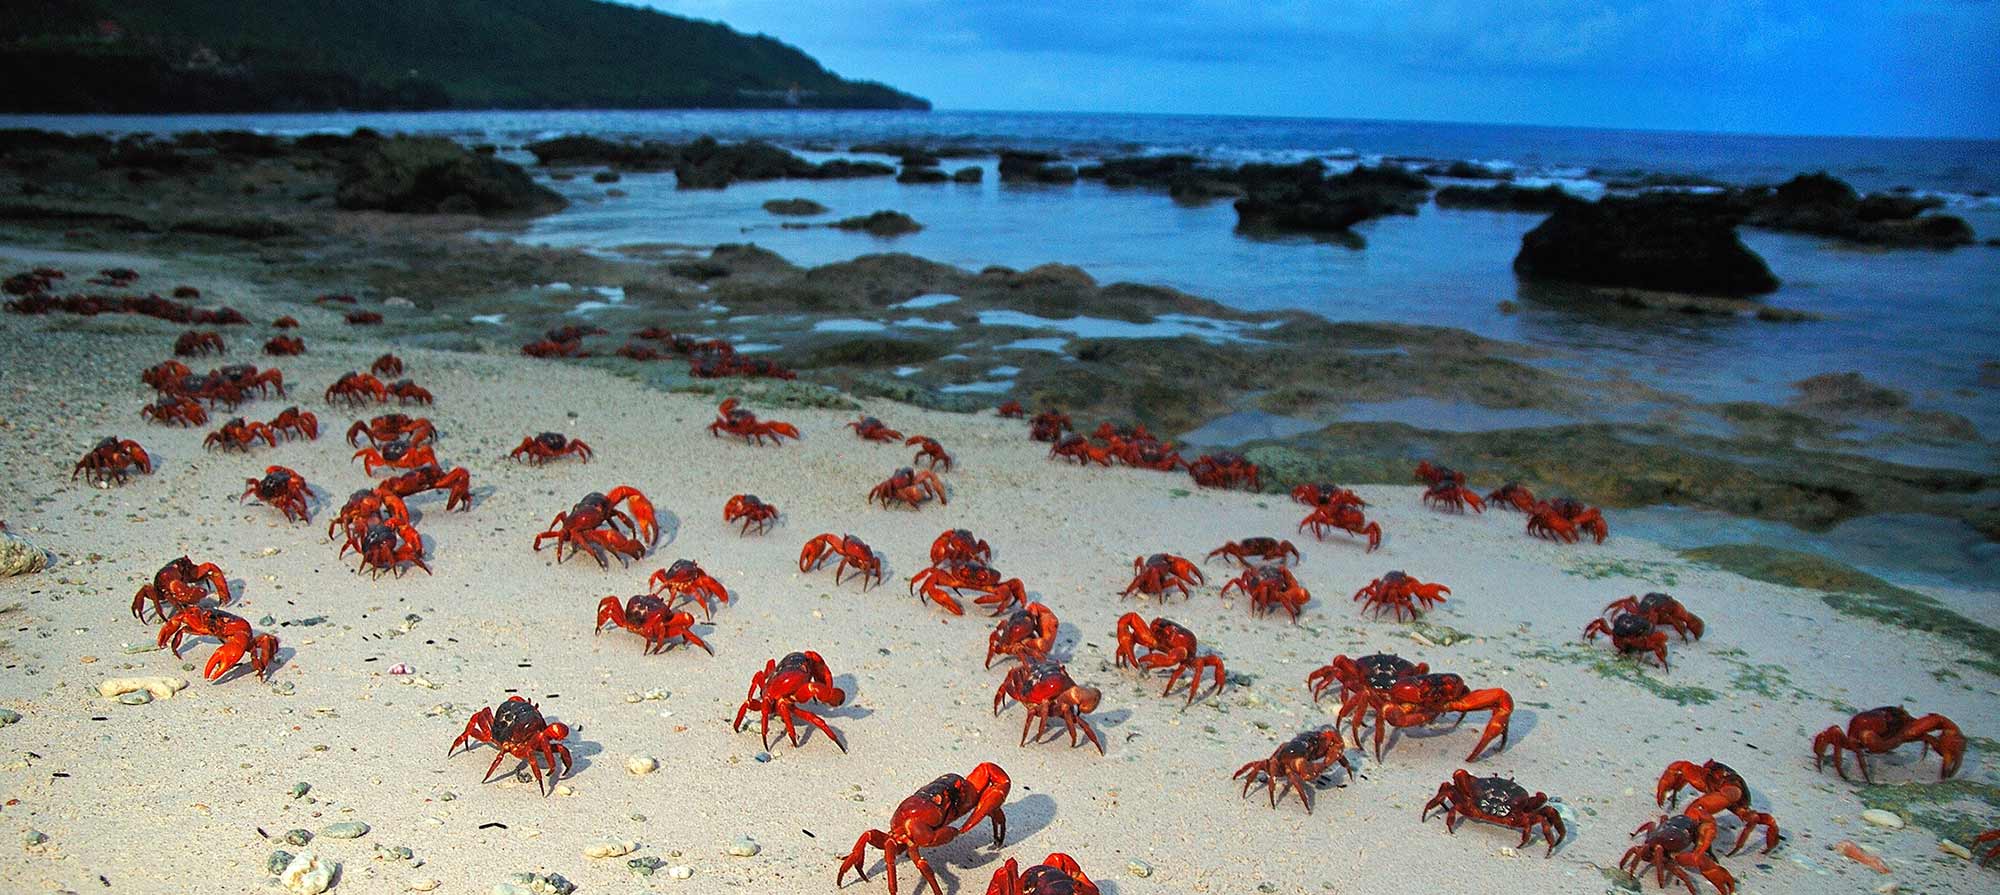 Red Crrab migration Christmas Island